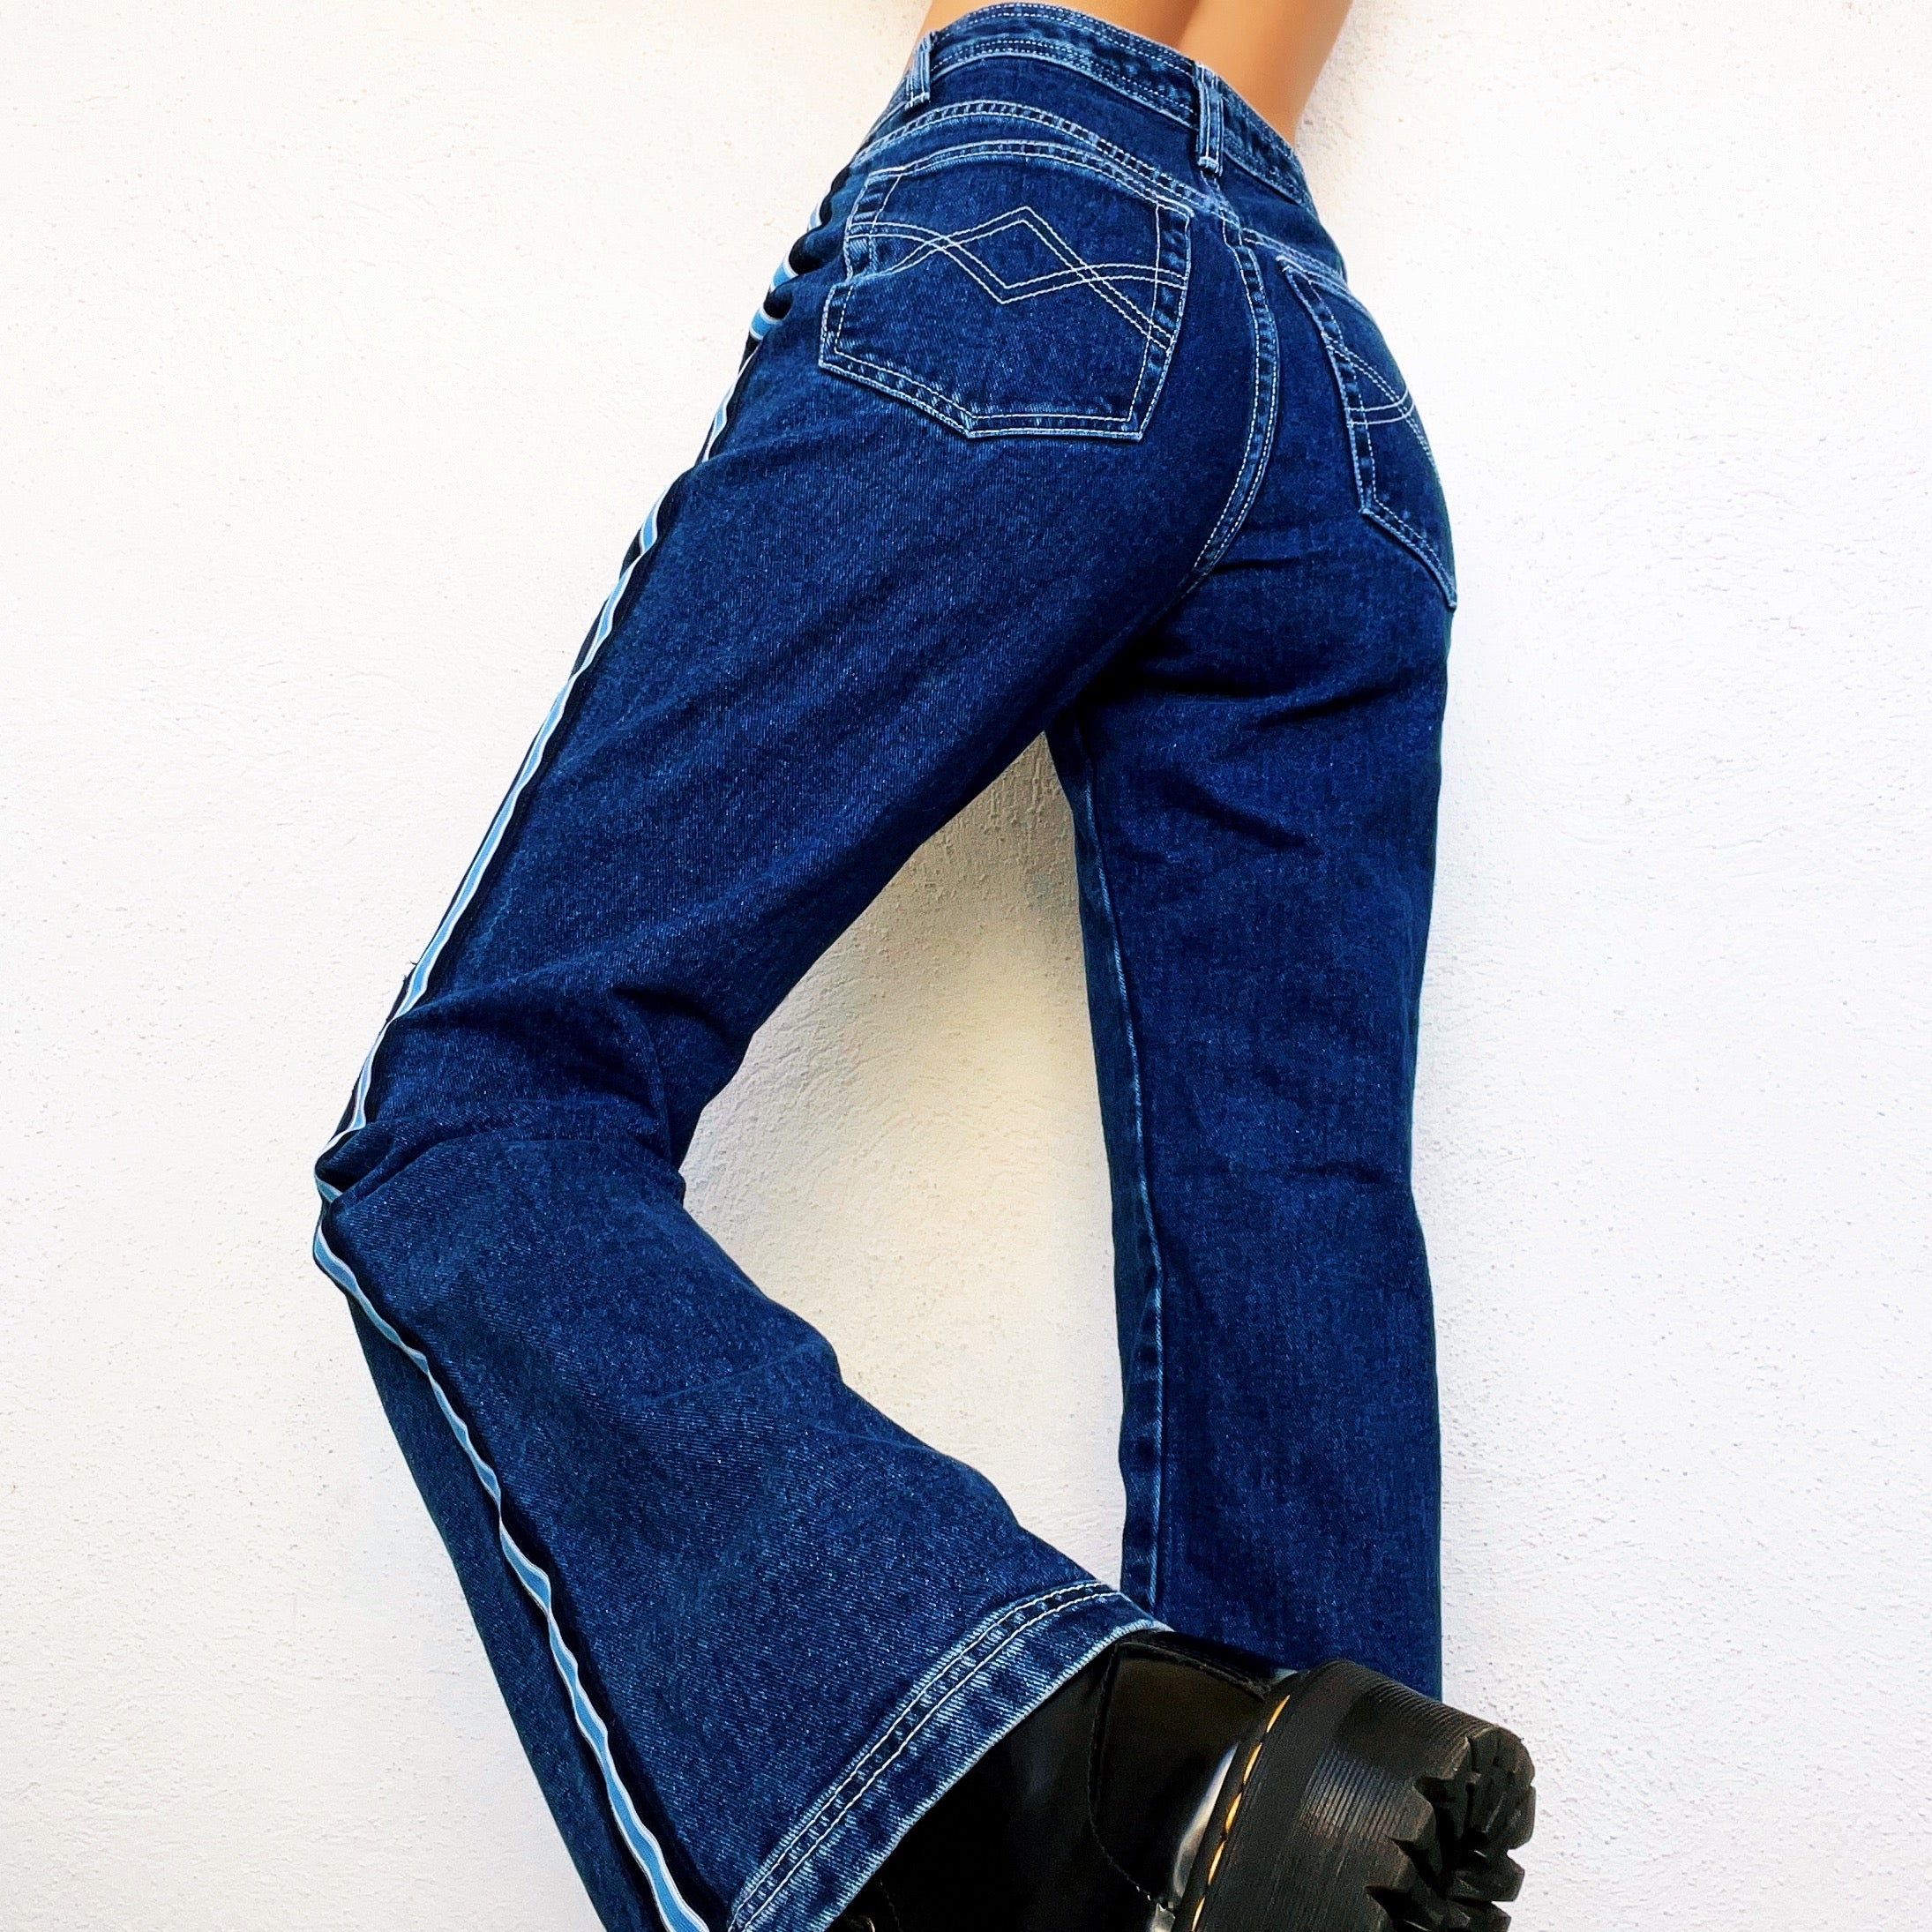 Vintage Sporty Striped Jeans (M)